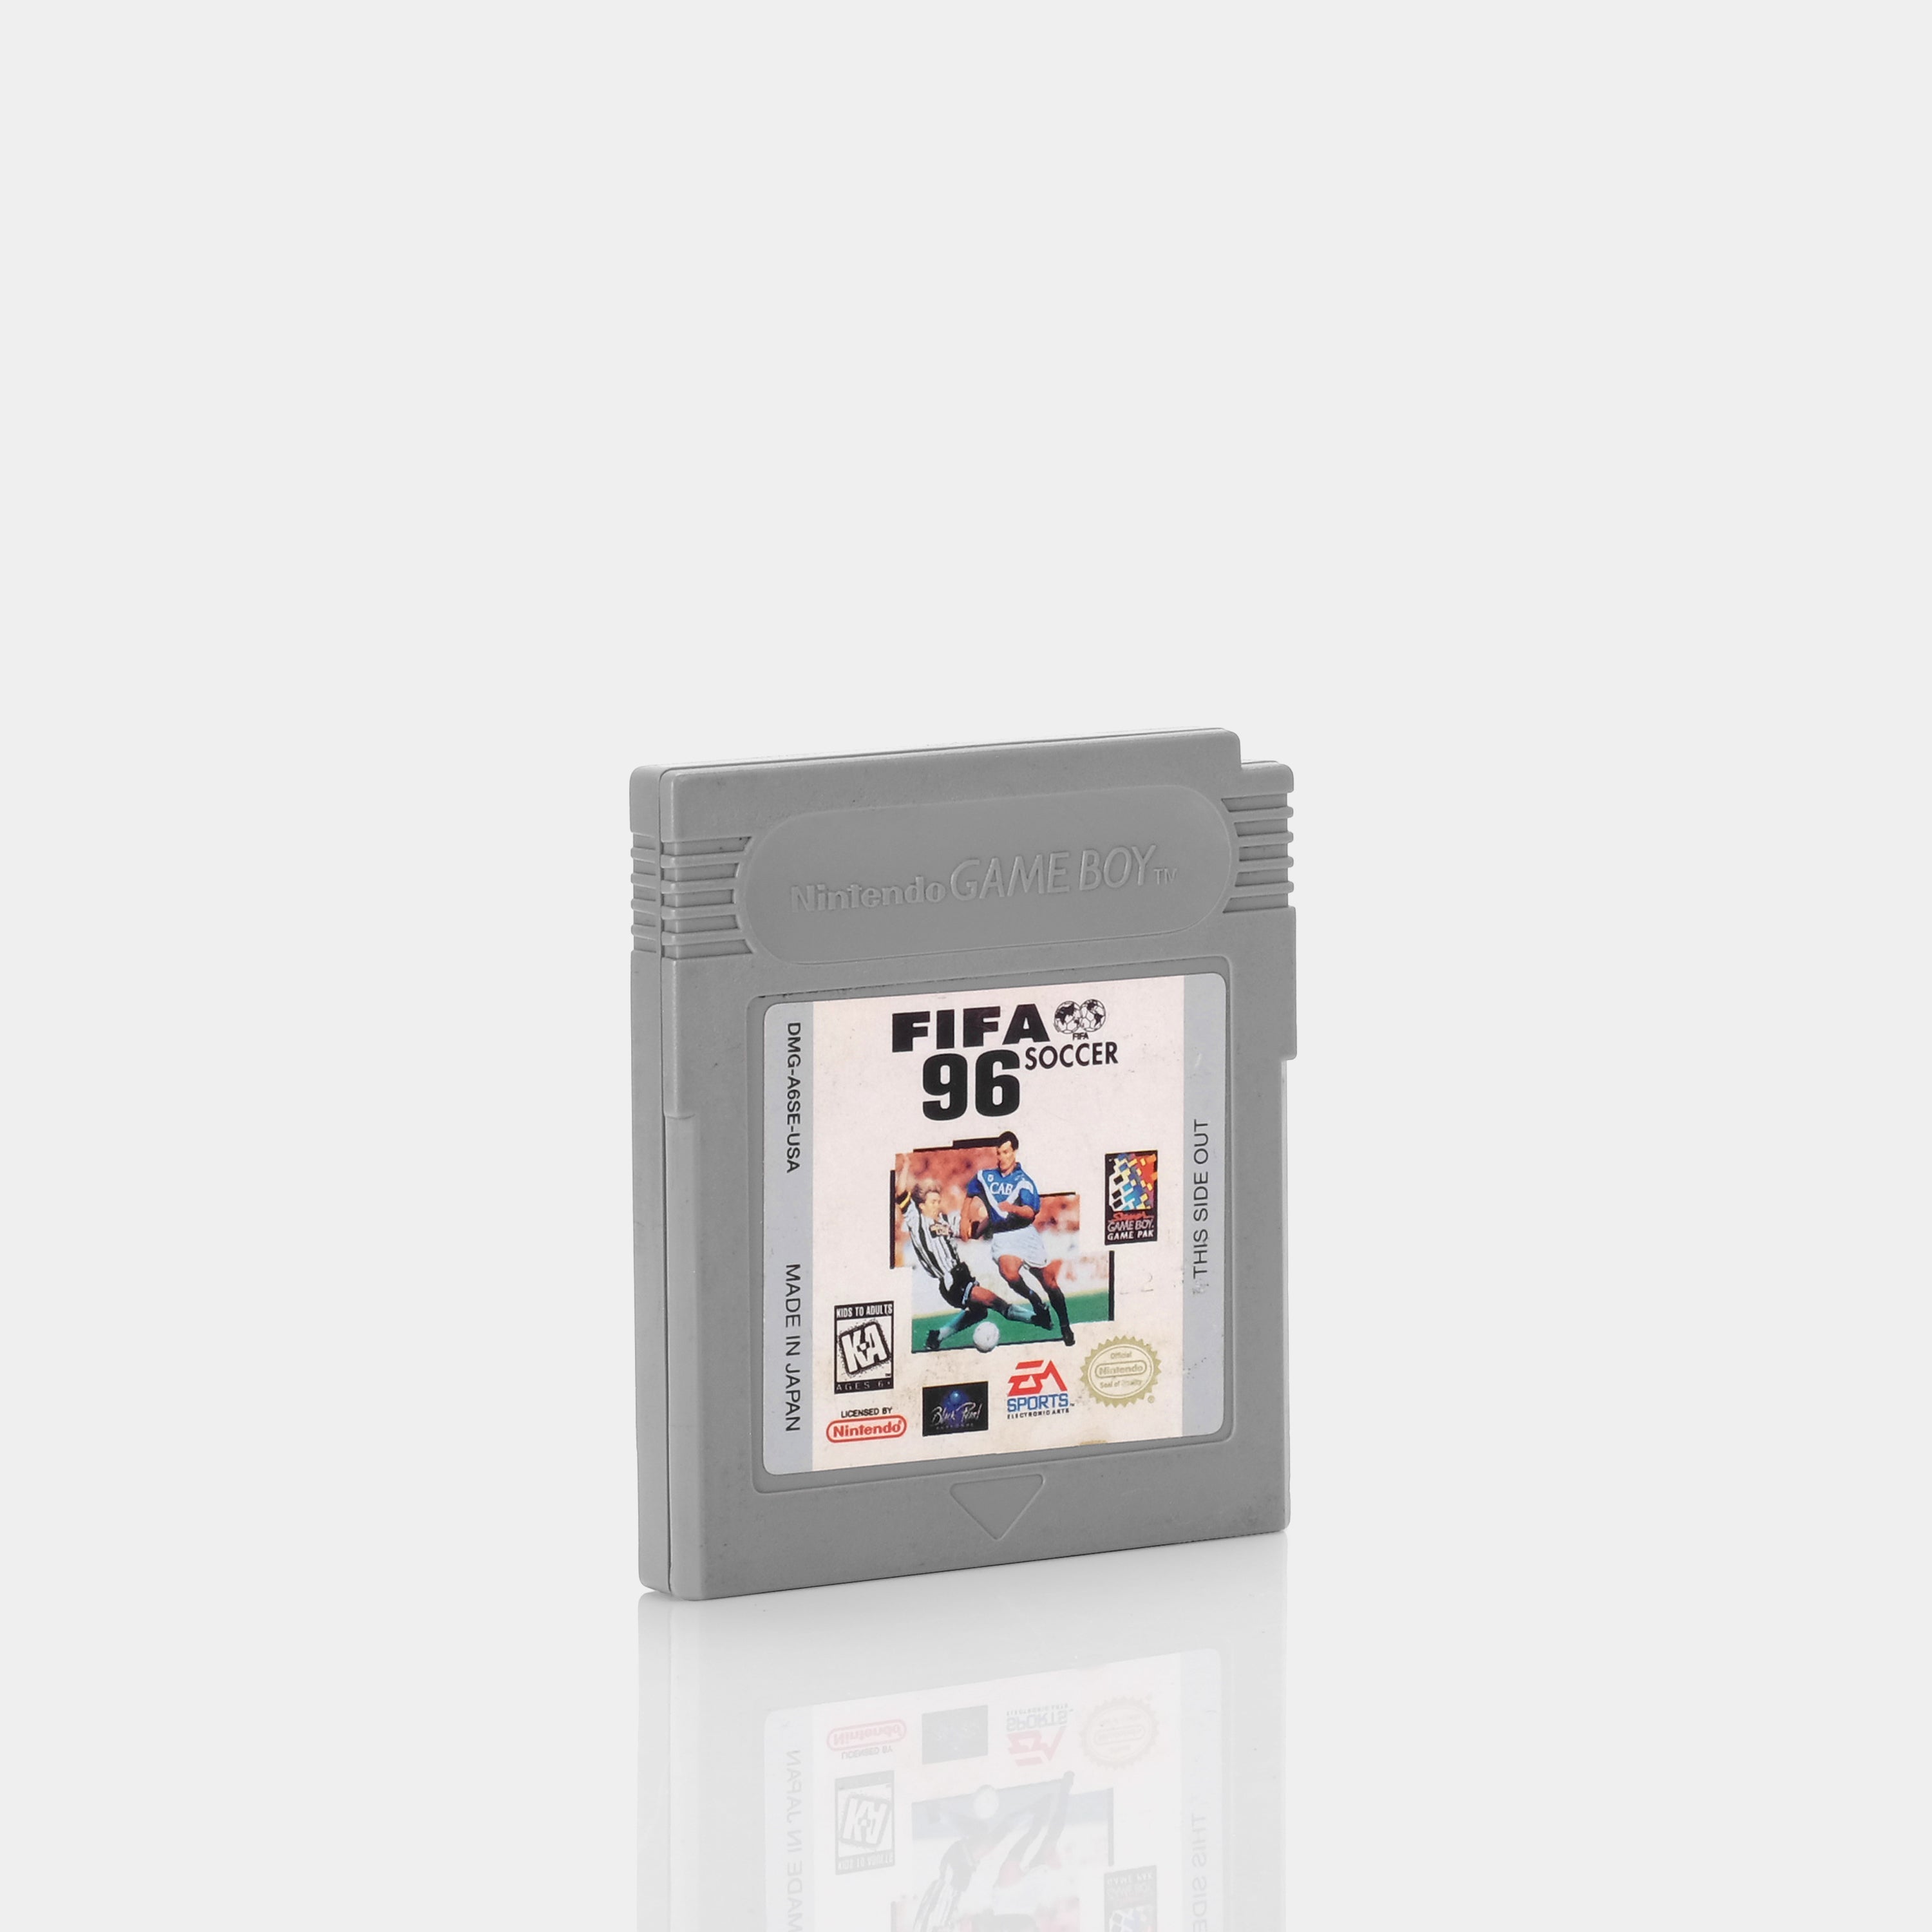 FIFA Soccer 96 Game Boy Game